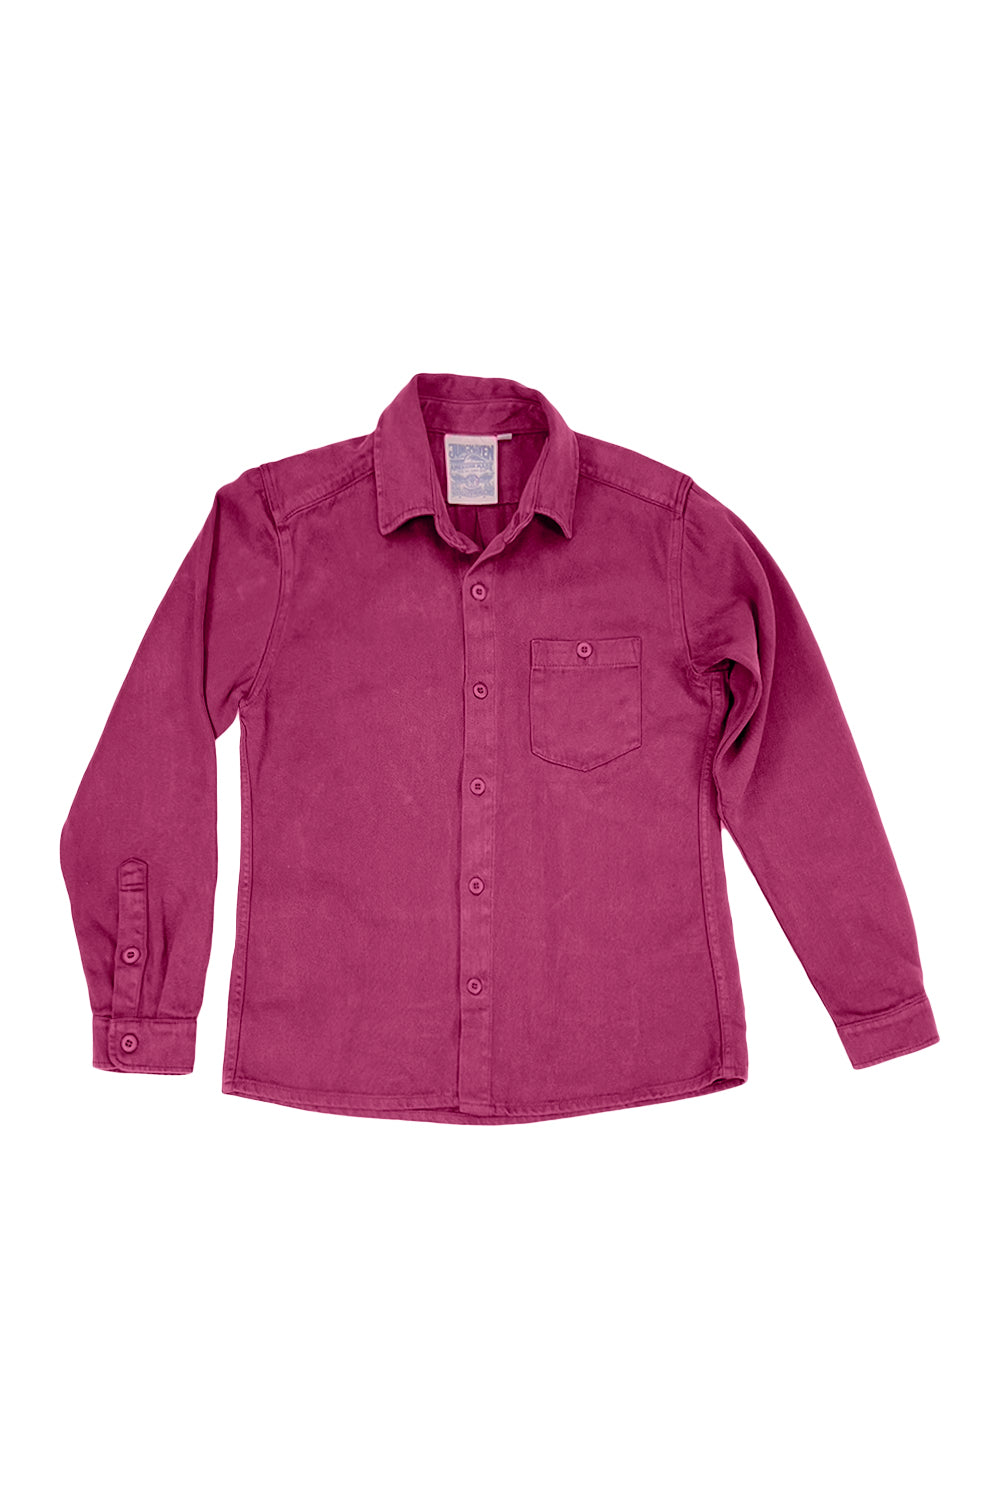 Topanga Shirt | Jungmaven Hemp Clothing & Accessories / Color: Burgundy 